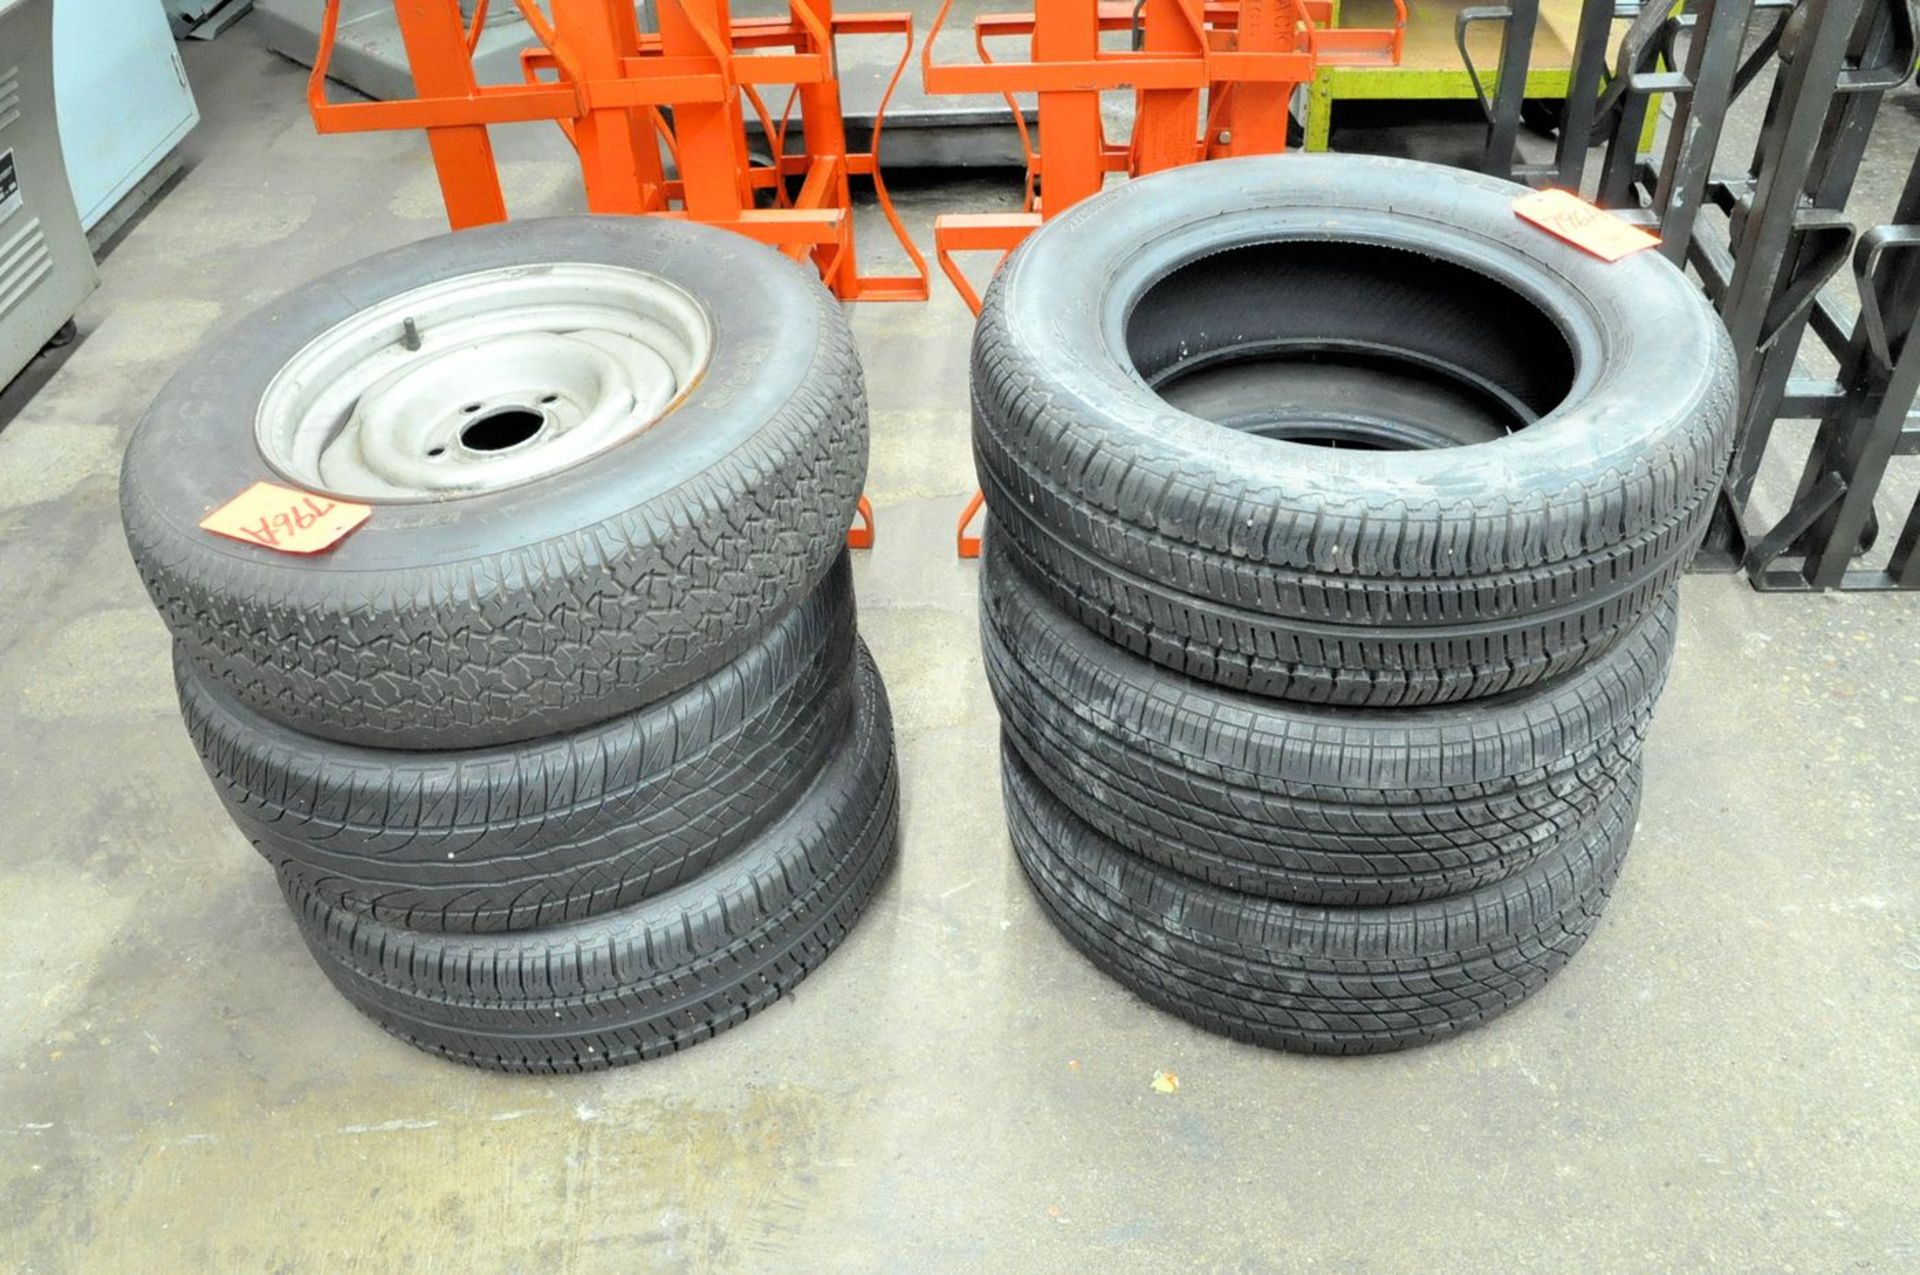 Lot - (2) Michelin 225/60 R16 Tires, (2) Kirkland 225/60 R16 Tires, (1) Dunlop 225/55 R17 Tire